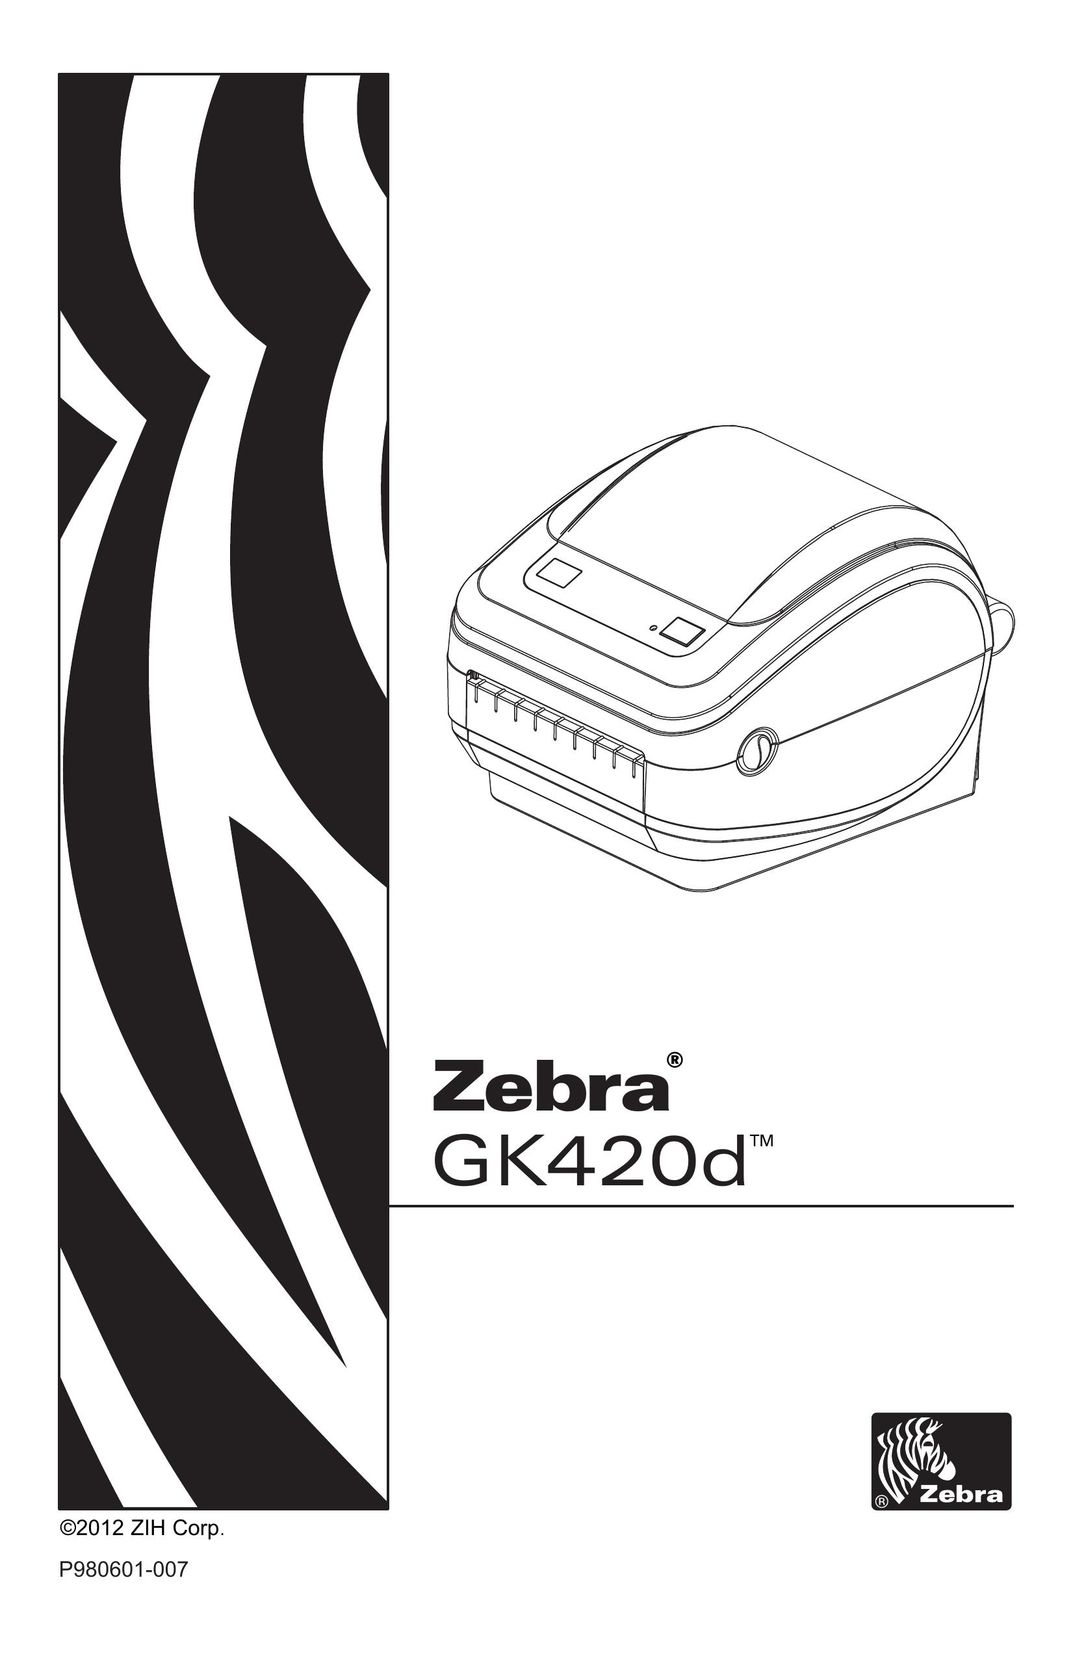 Zebra Technologies GK420D Printer User Manual